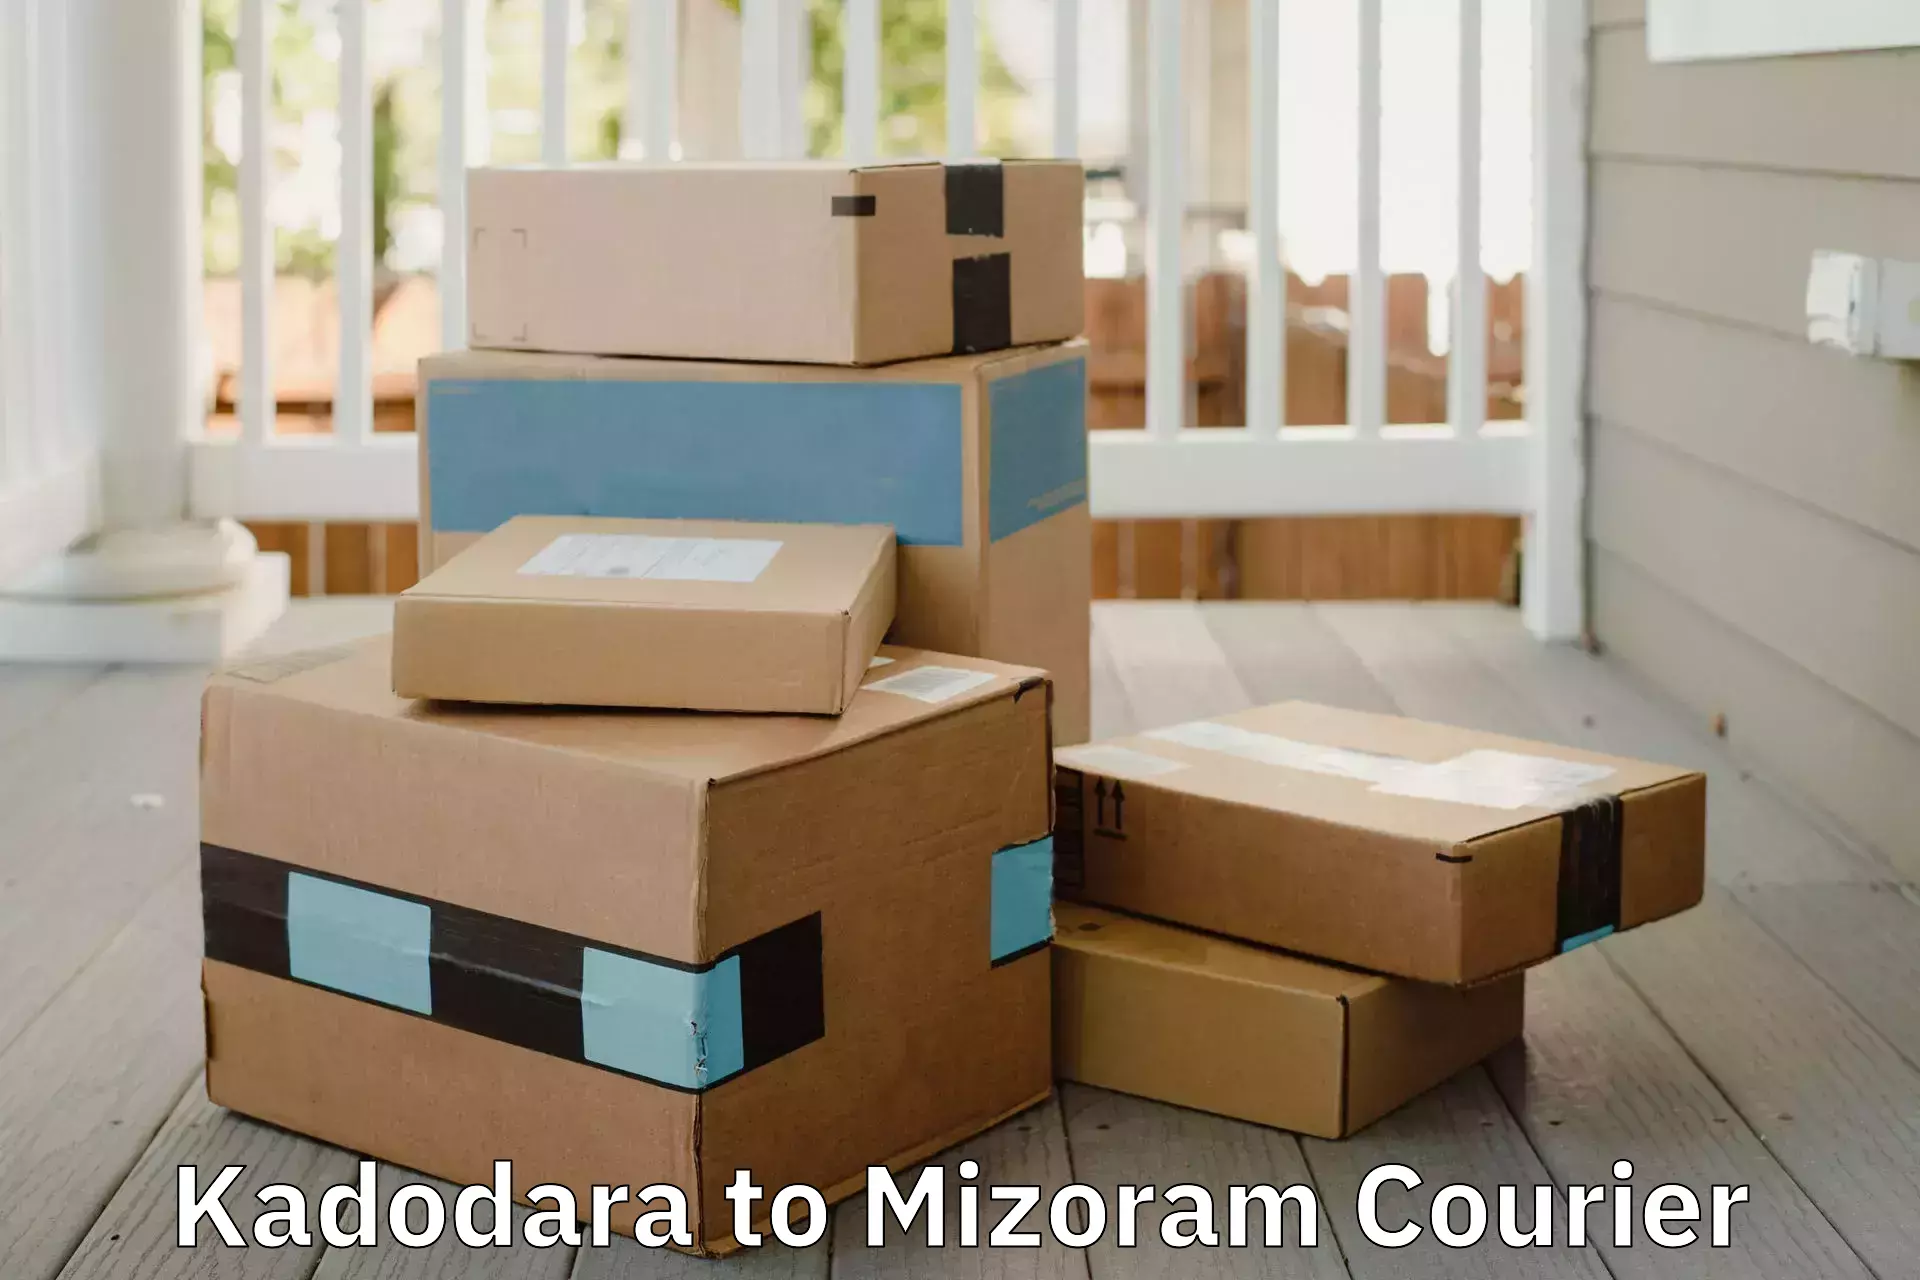 Trusted relocation experts Kadodara to Mizoram